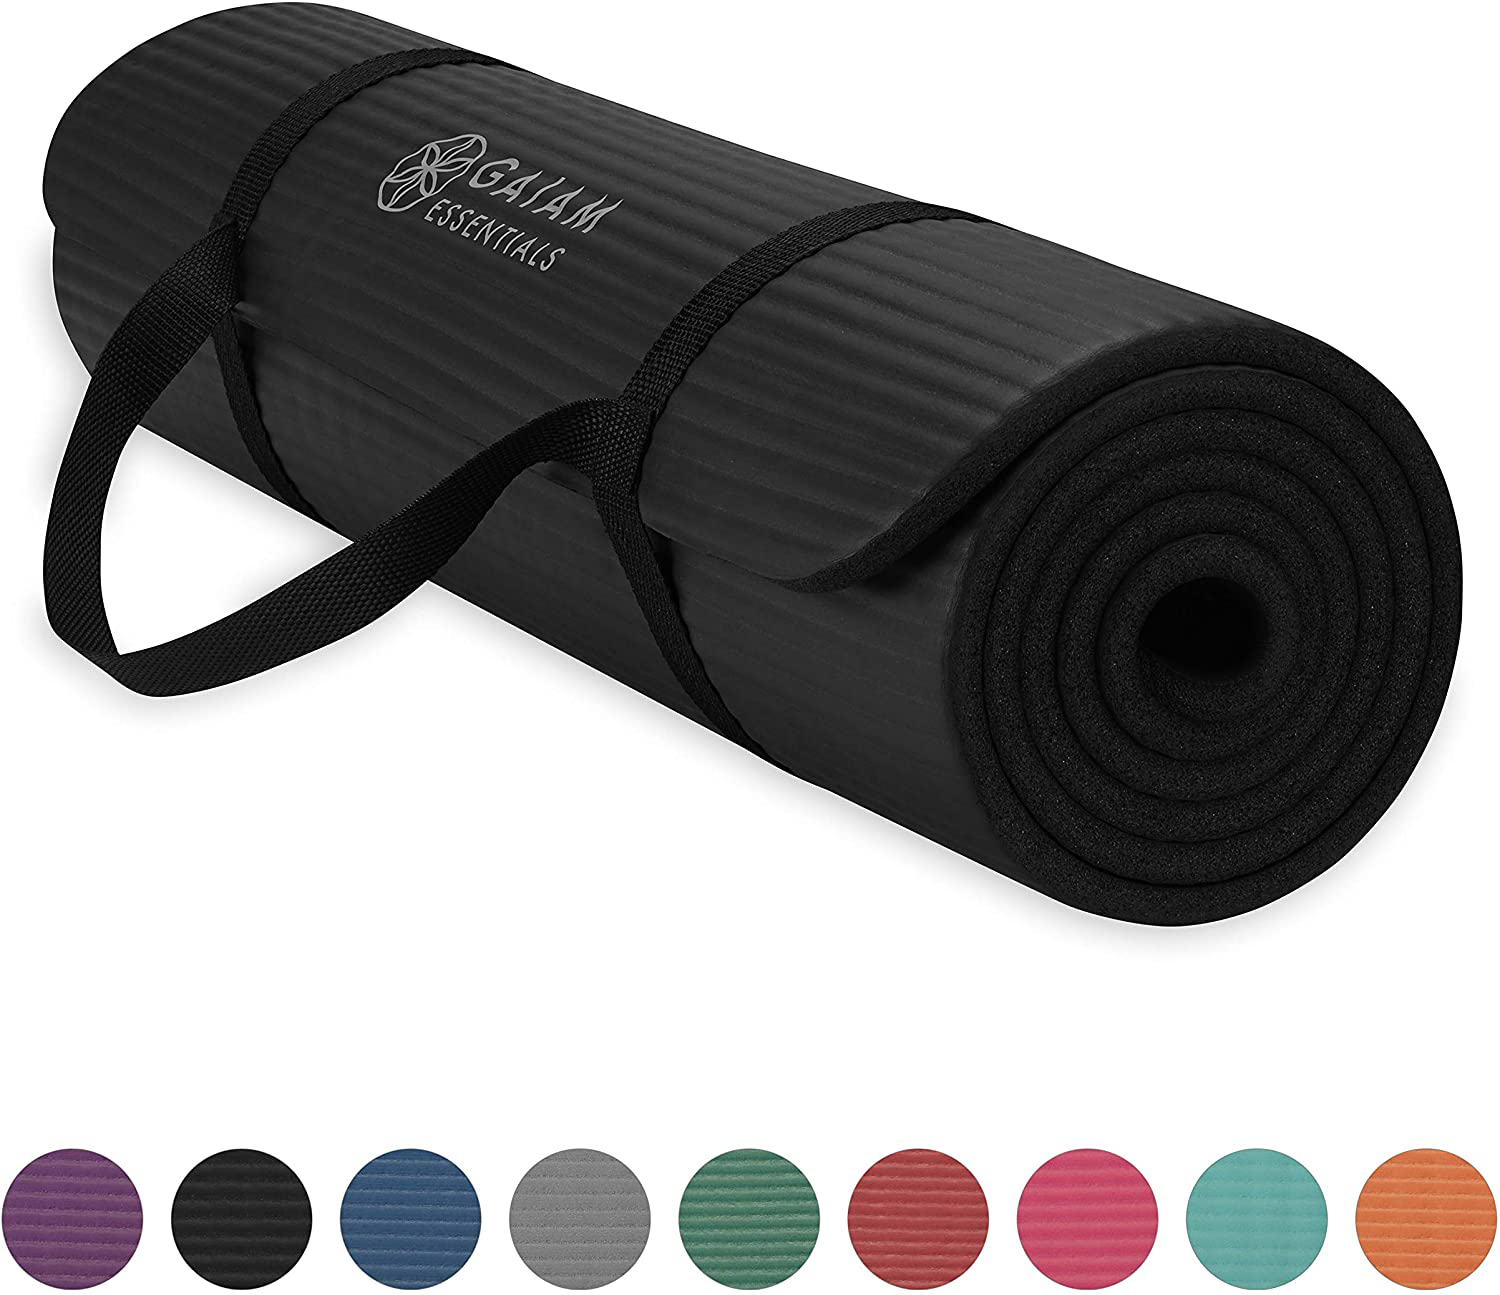 Deluxe Studio Extra Thick Yoga Mat - Black